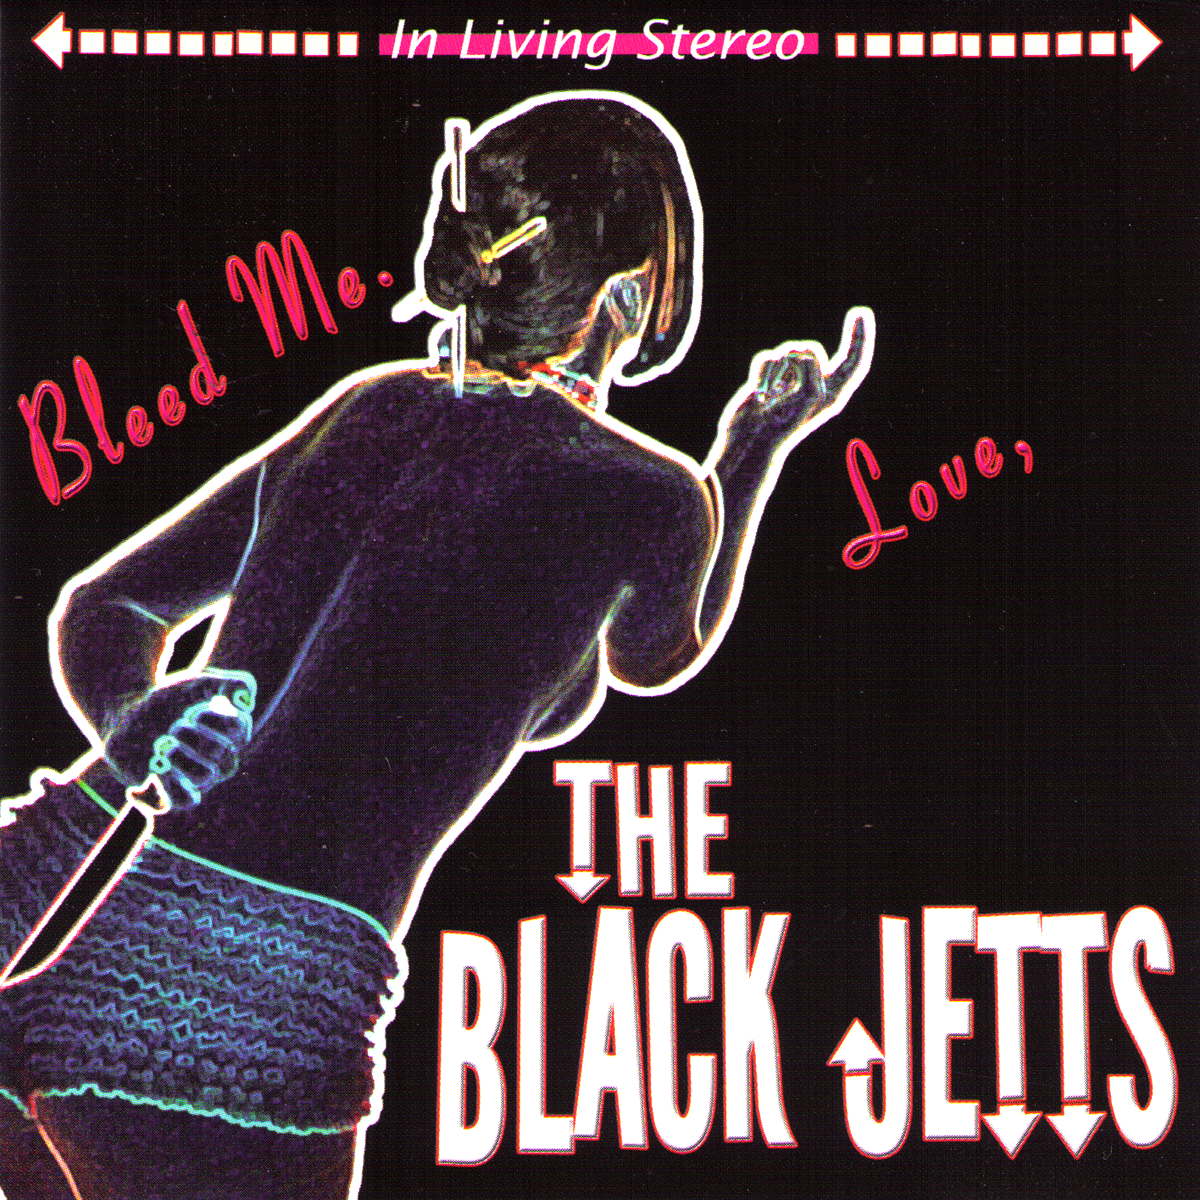 Black Jetts- Bleed Me LP ~HEARTBREAKERS!